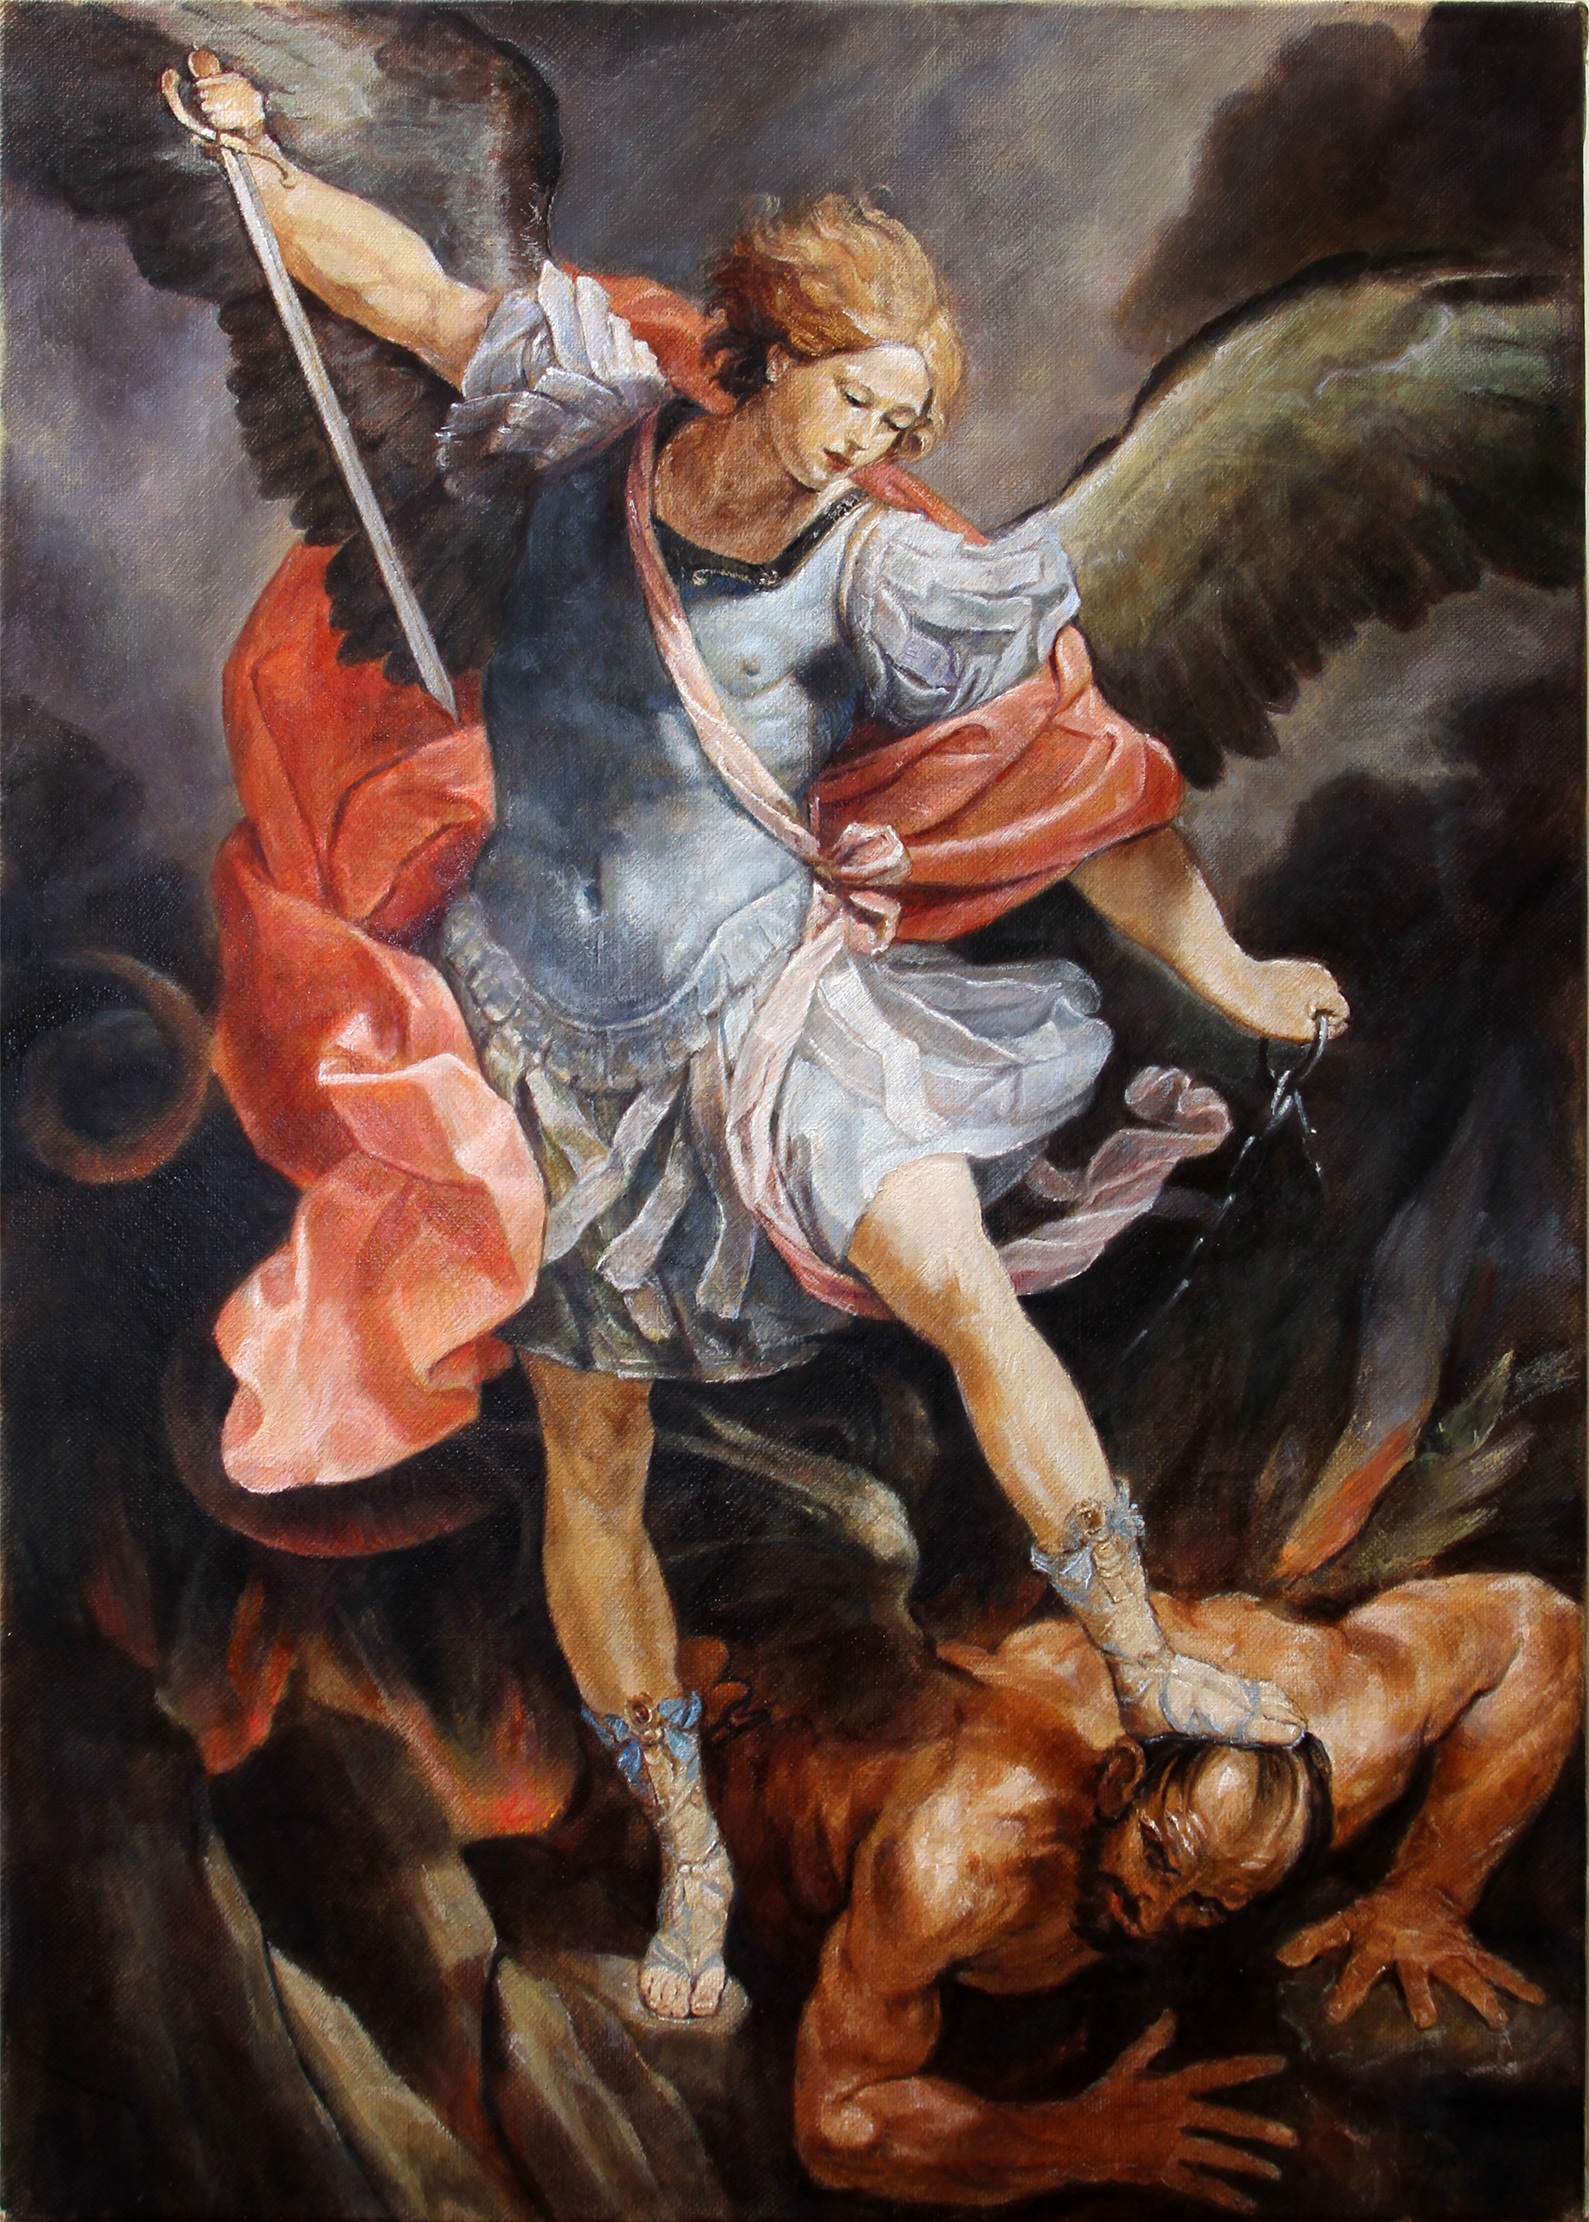 Archangel Michael 2018 - Oil Painting - Fine Arts Gallery - Original